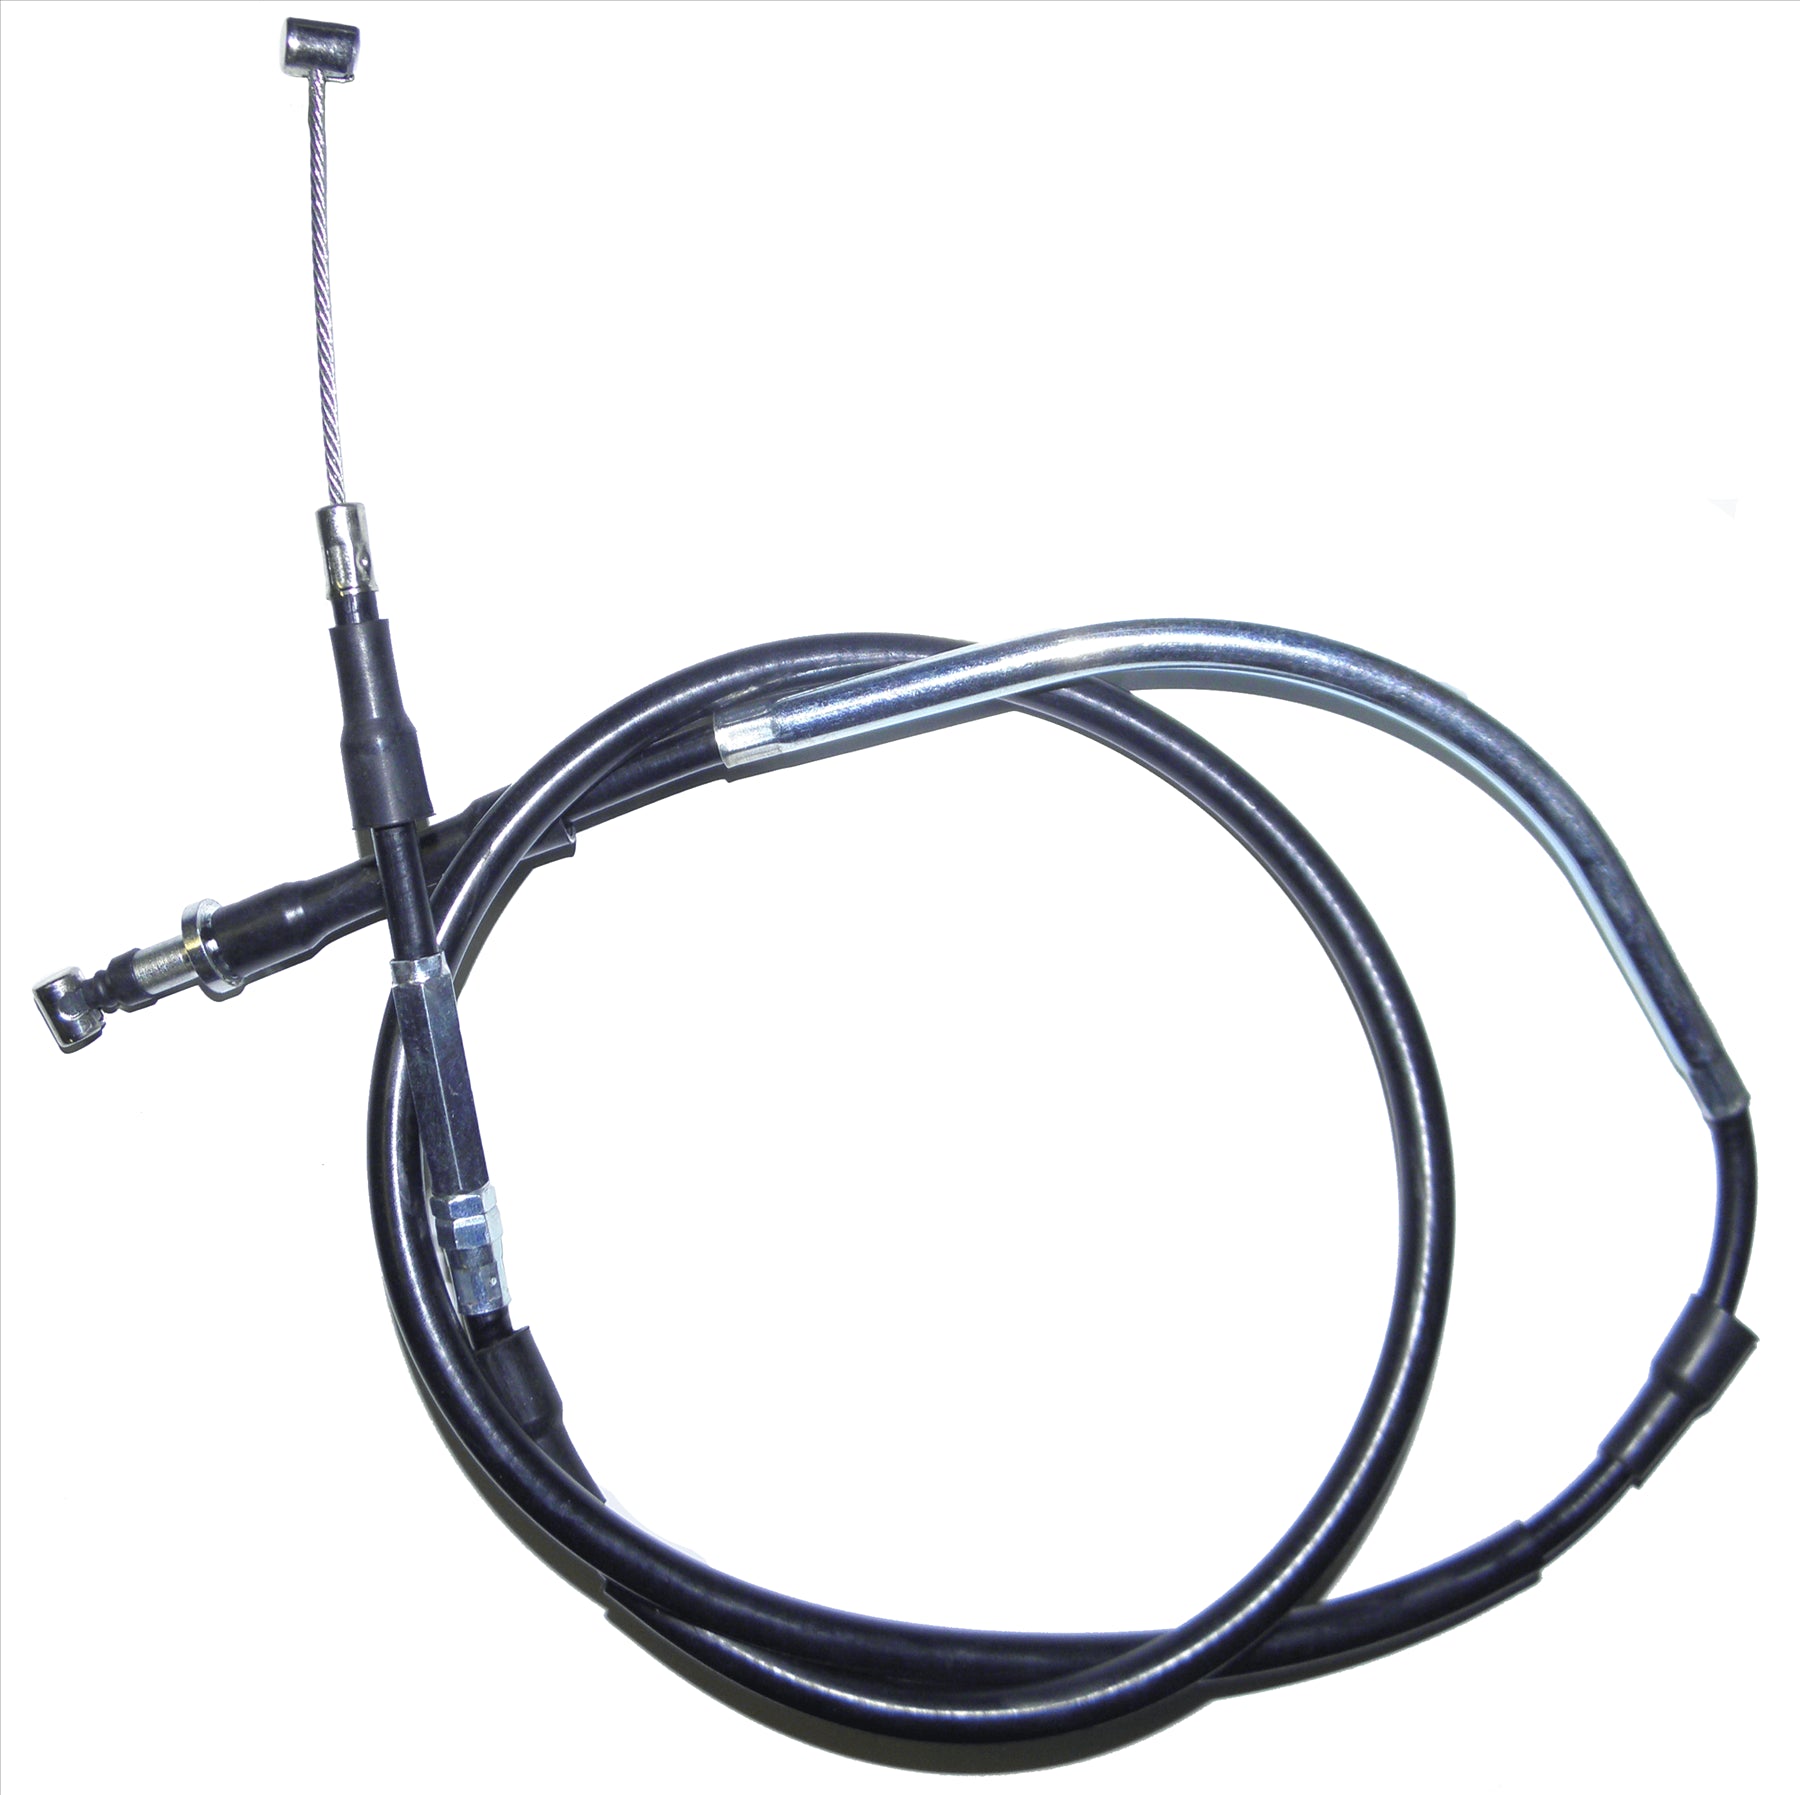 Apico Black Clutch Cable For Suzuki RMZ 250 2005-2006